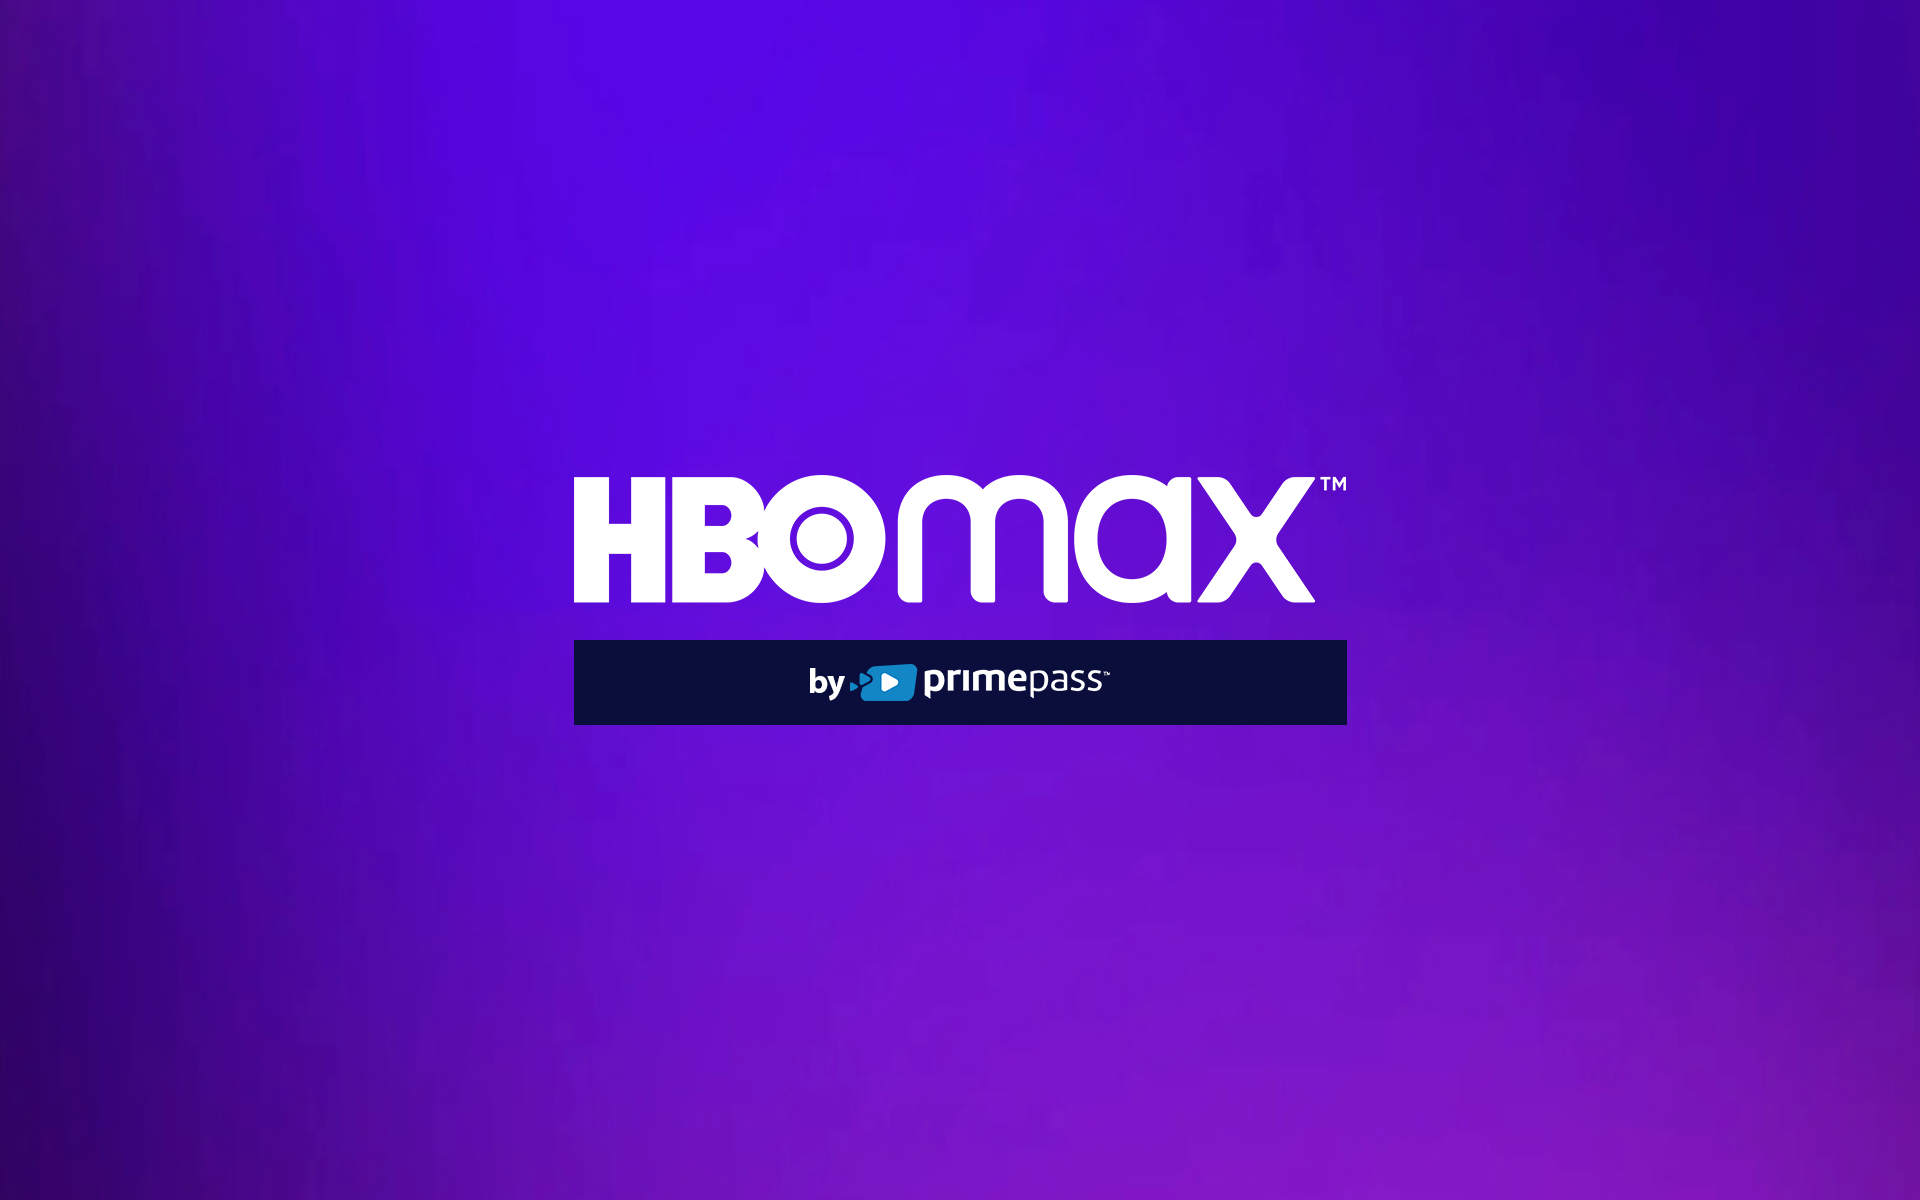 HBO MAX (PRIMEPASS)